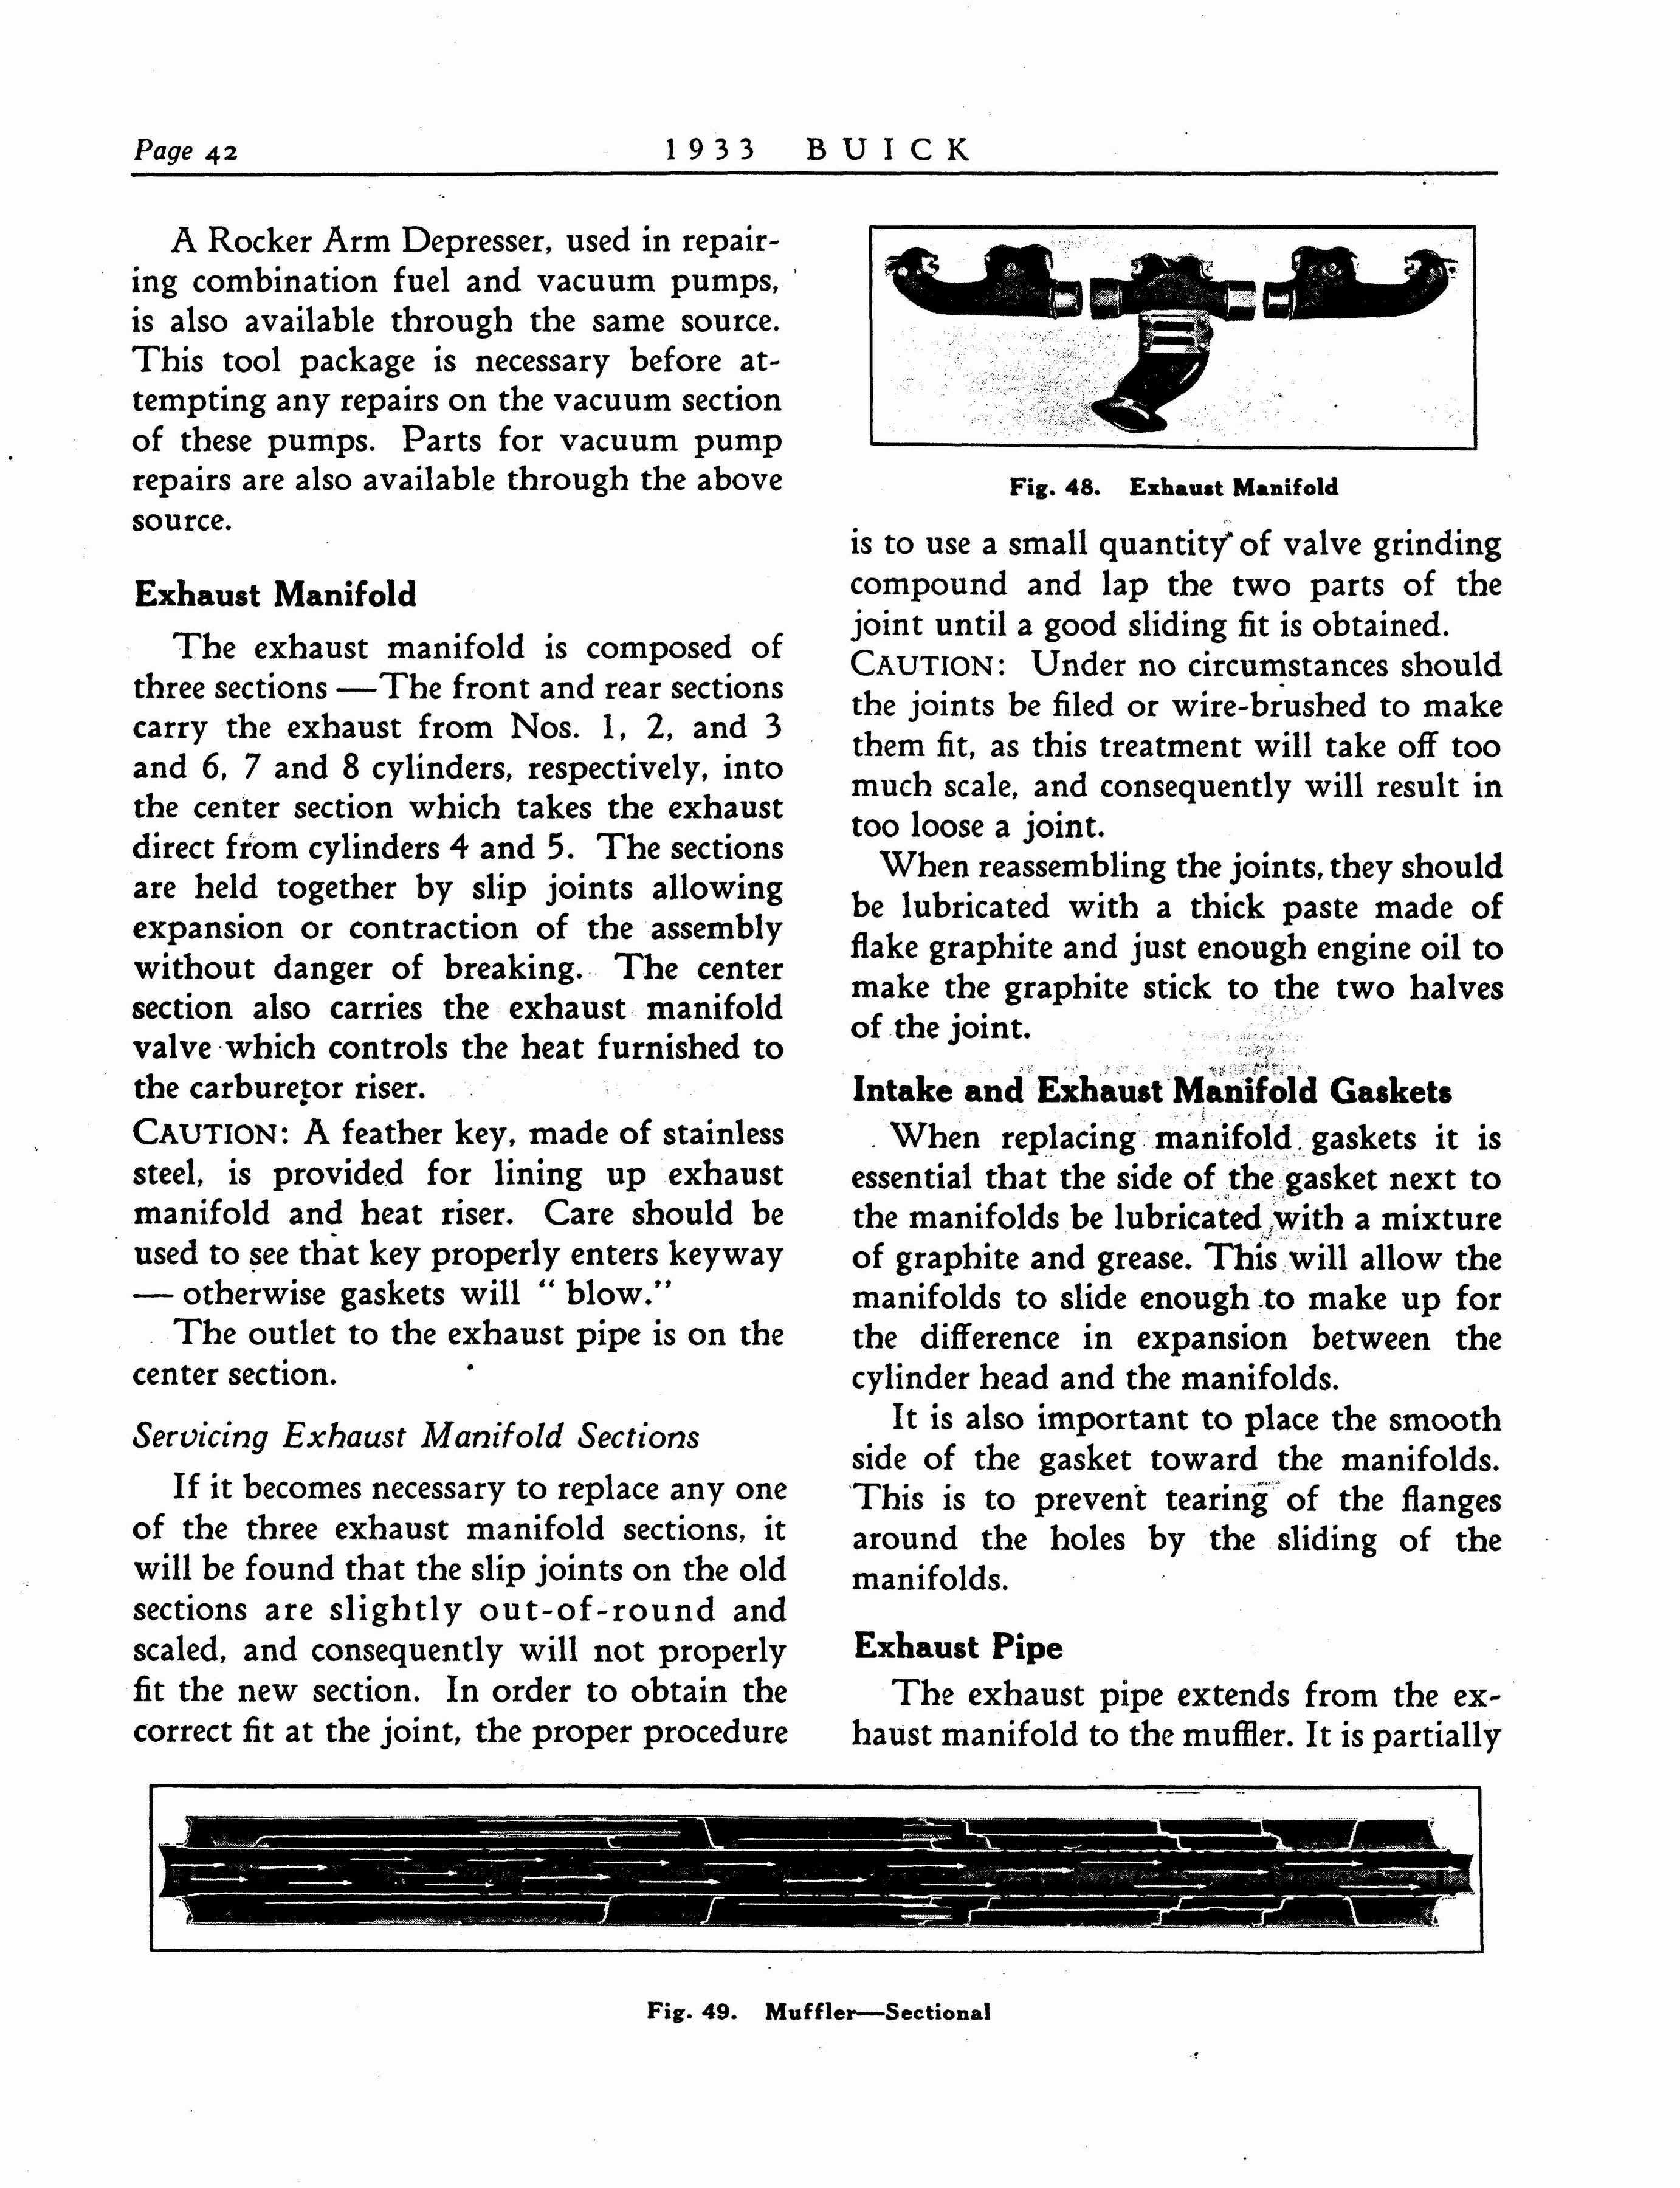 n_1933 Buick Shop Manual_Page_043.jpg